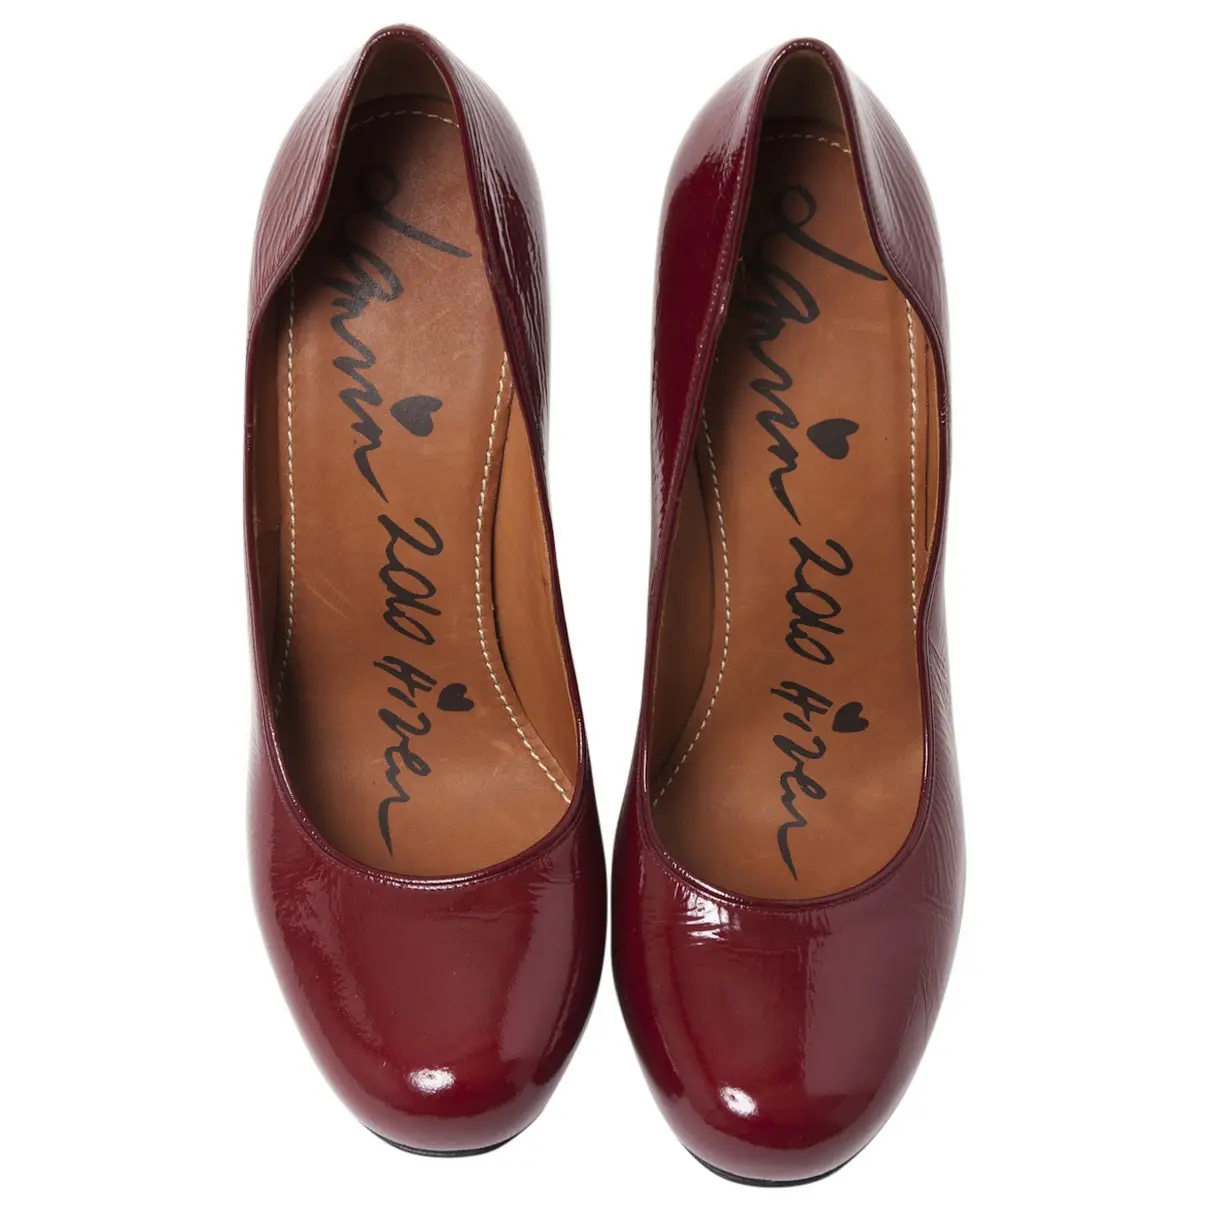 Buy Lanvin Patent leather heels online